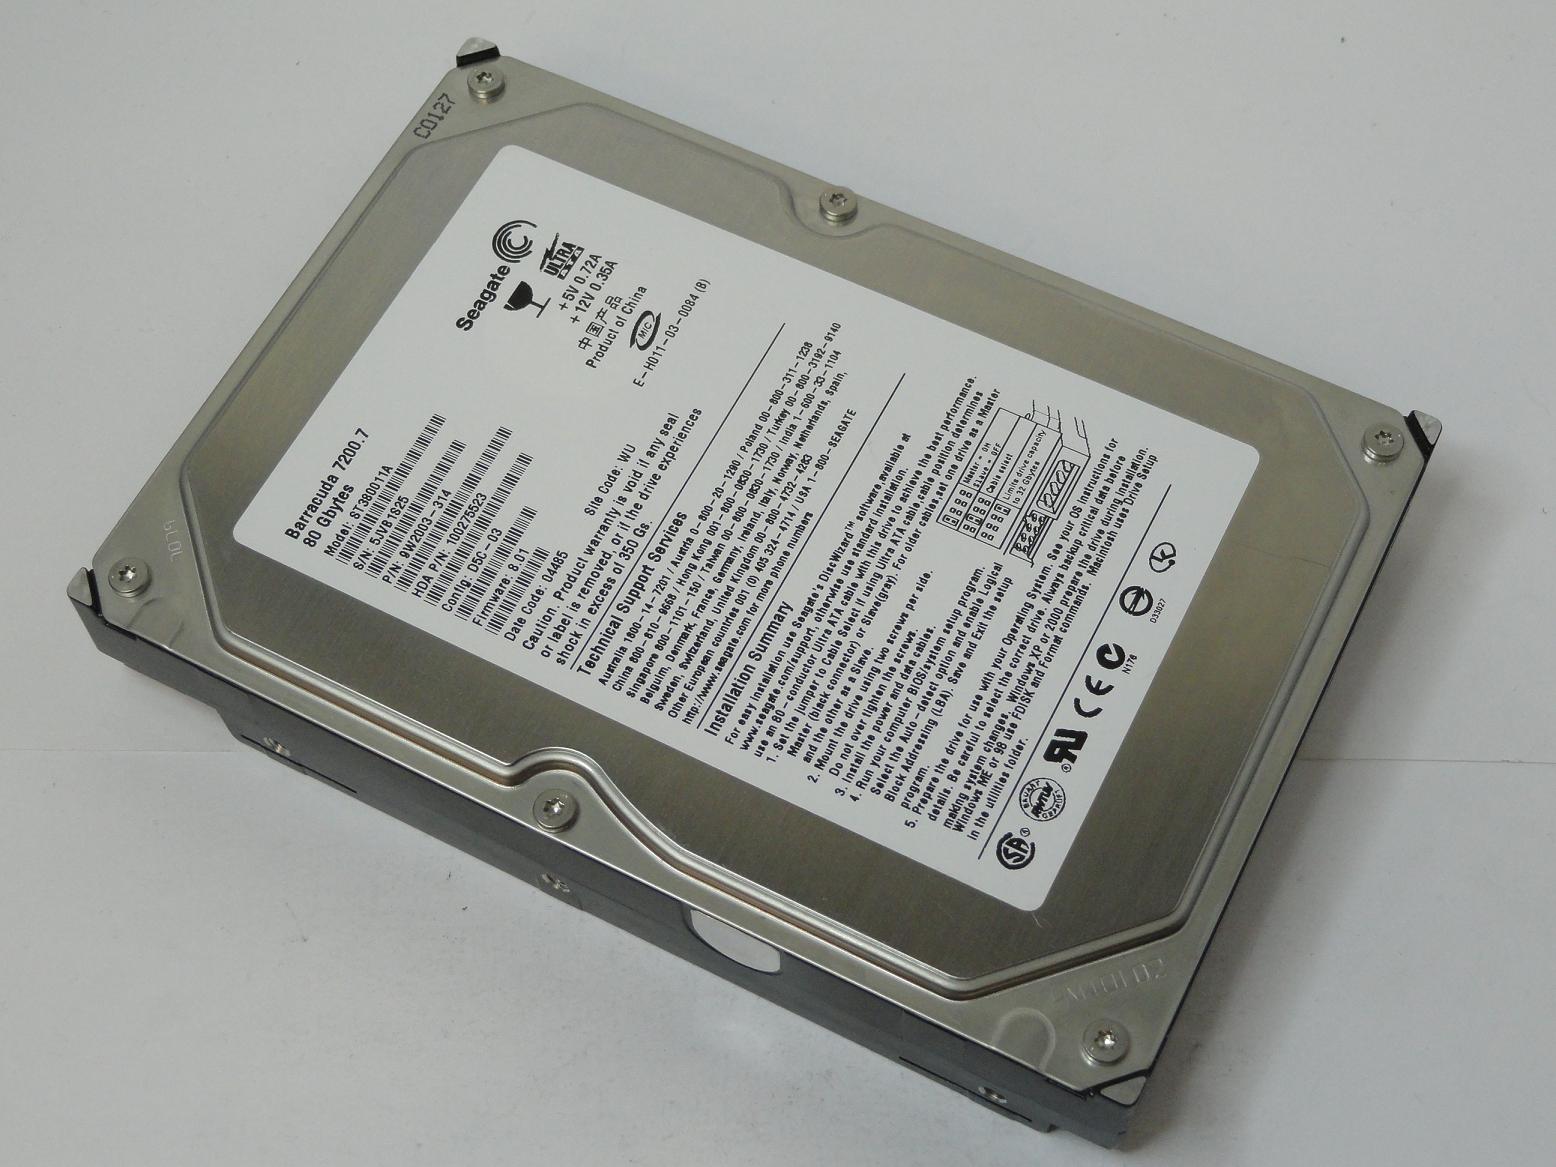 9W2003-314 - Seagate 80GB IDE 7200rpm 3.5in HDD - Refurbished